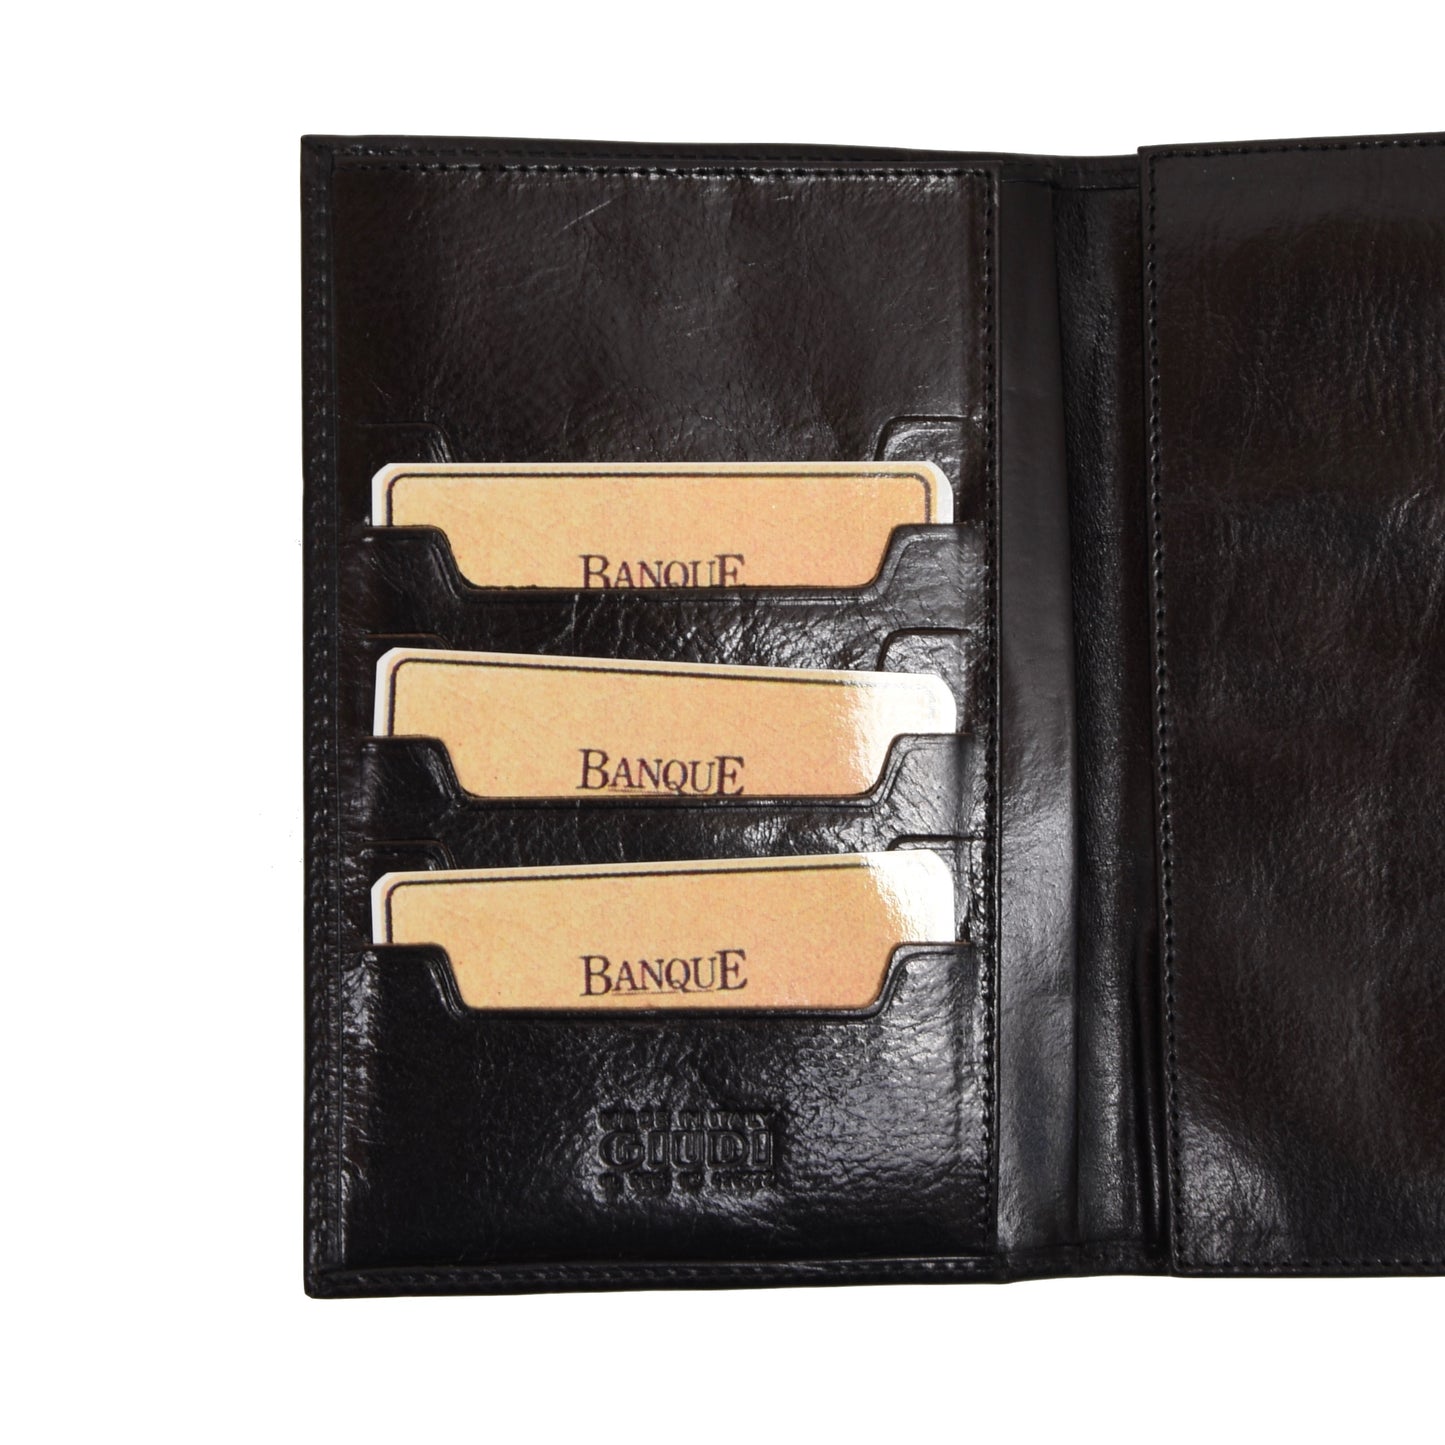 Giudi Leather Travel Wallet - Black